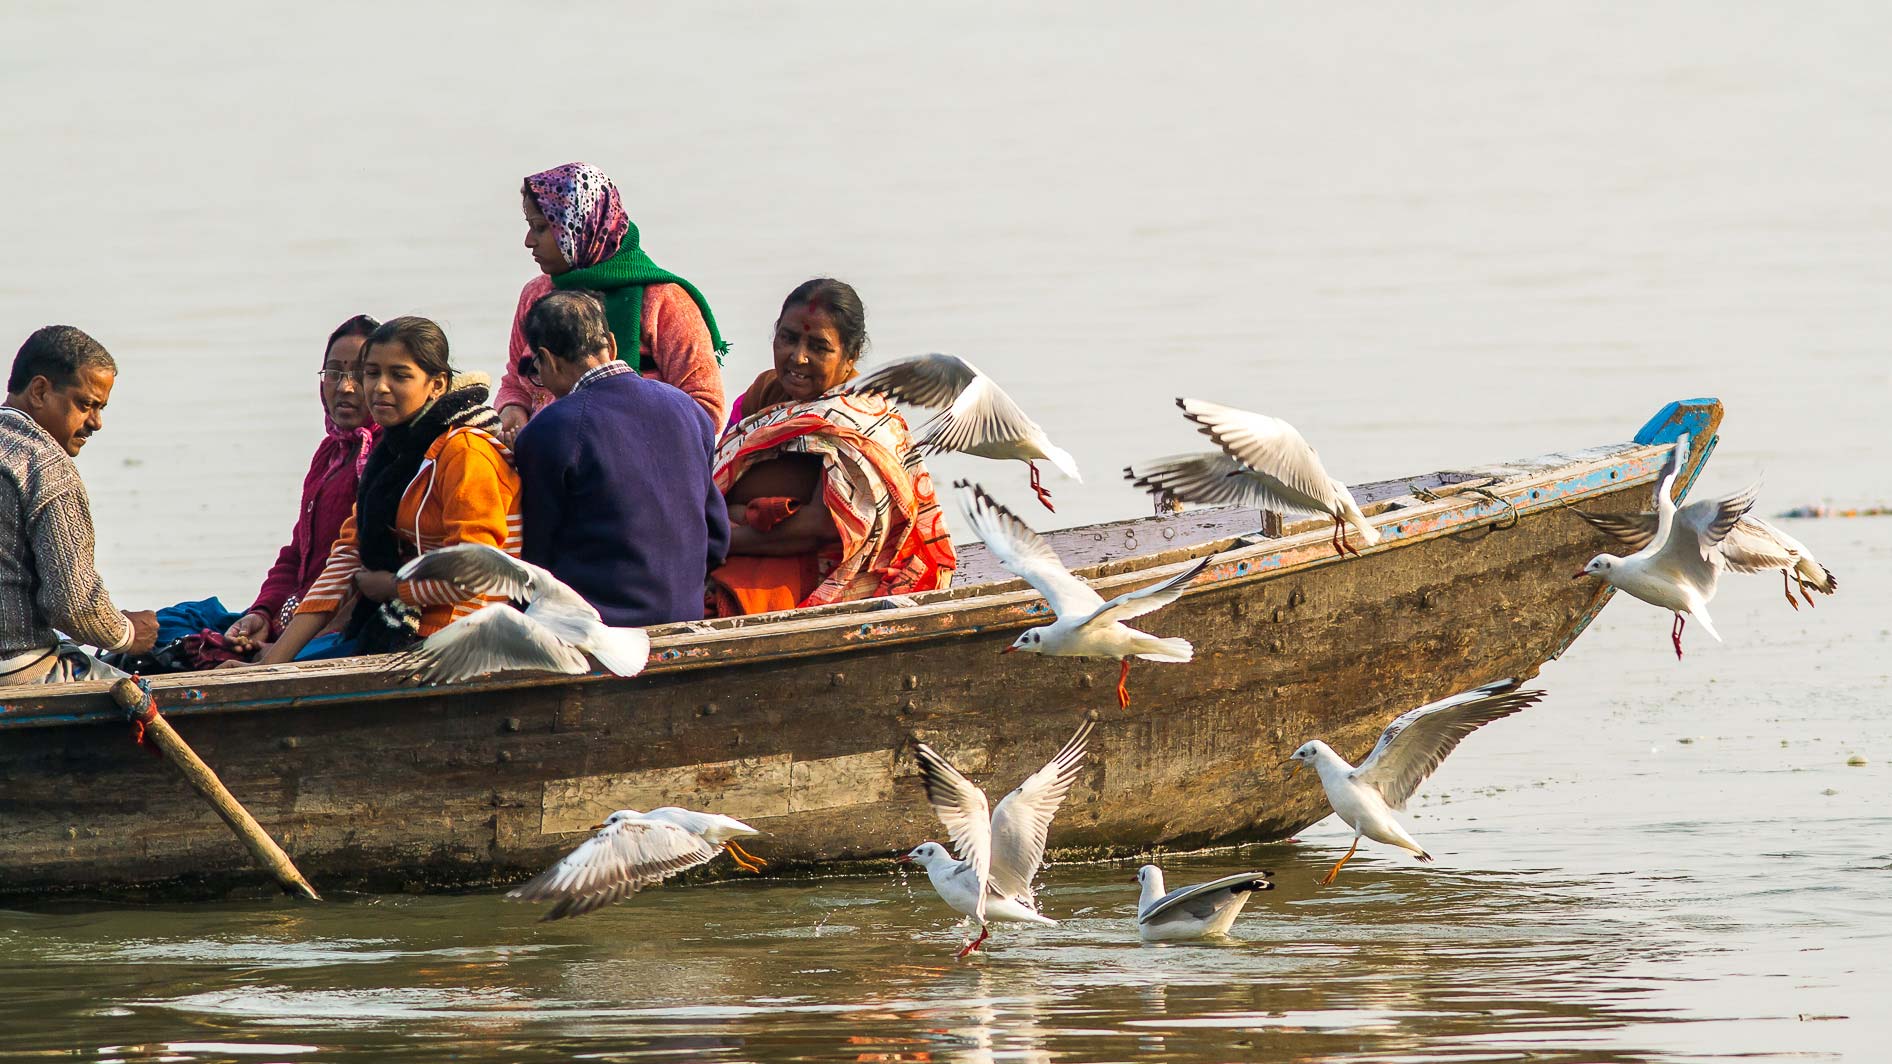 /Guewen/galeries/public/Voyages/Inde/varanasi/gange/Ganga-2/Varanasi-gange_093.jpg